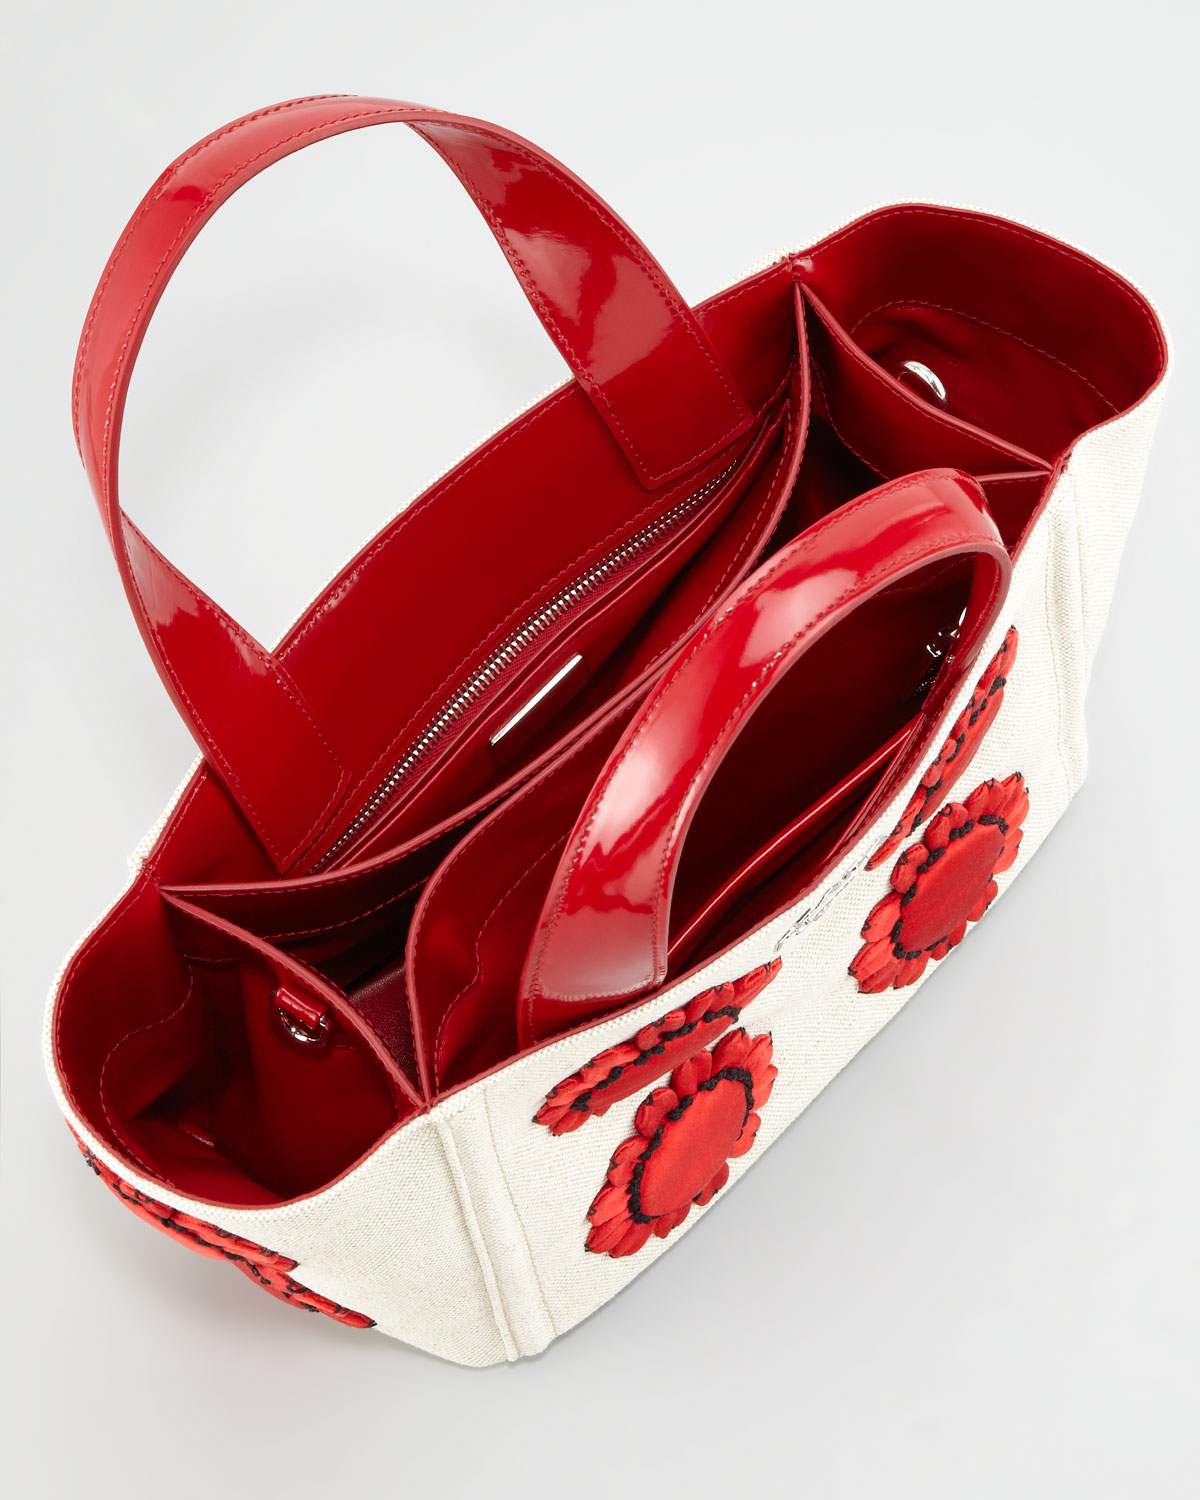 Prada Floral Basket Tote Bag in Red (multi colors) | Lyst  